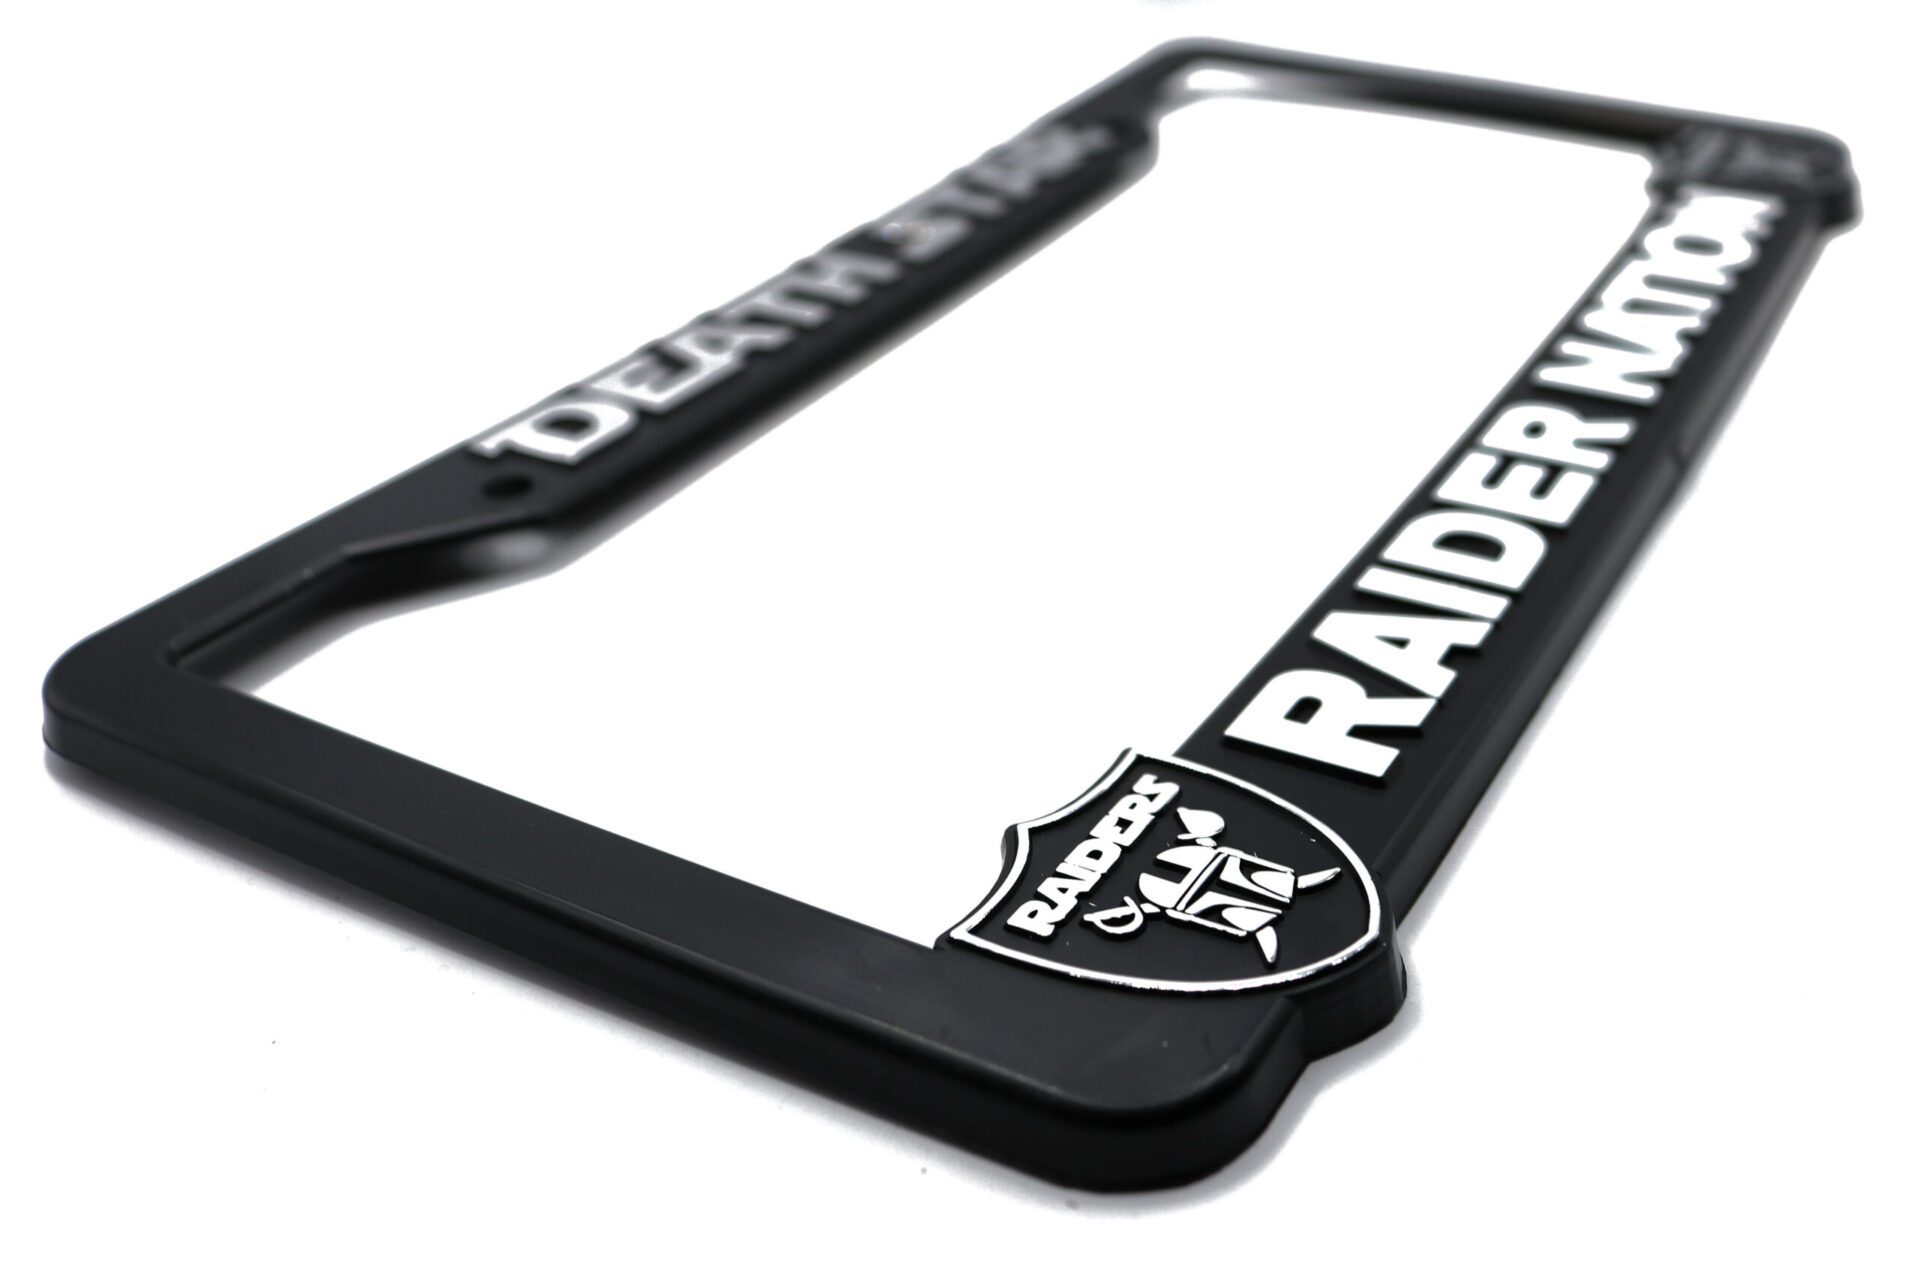 Las Vegas Raiders “Deathstar Raider Nation” License Plate Frame (Chrome)